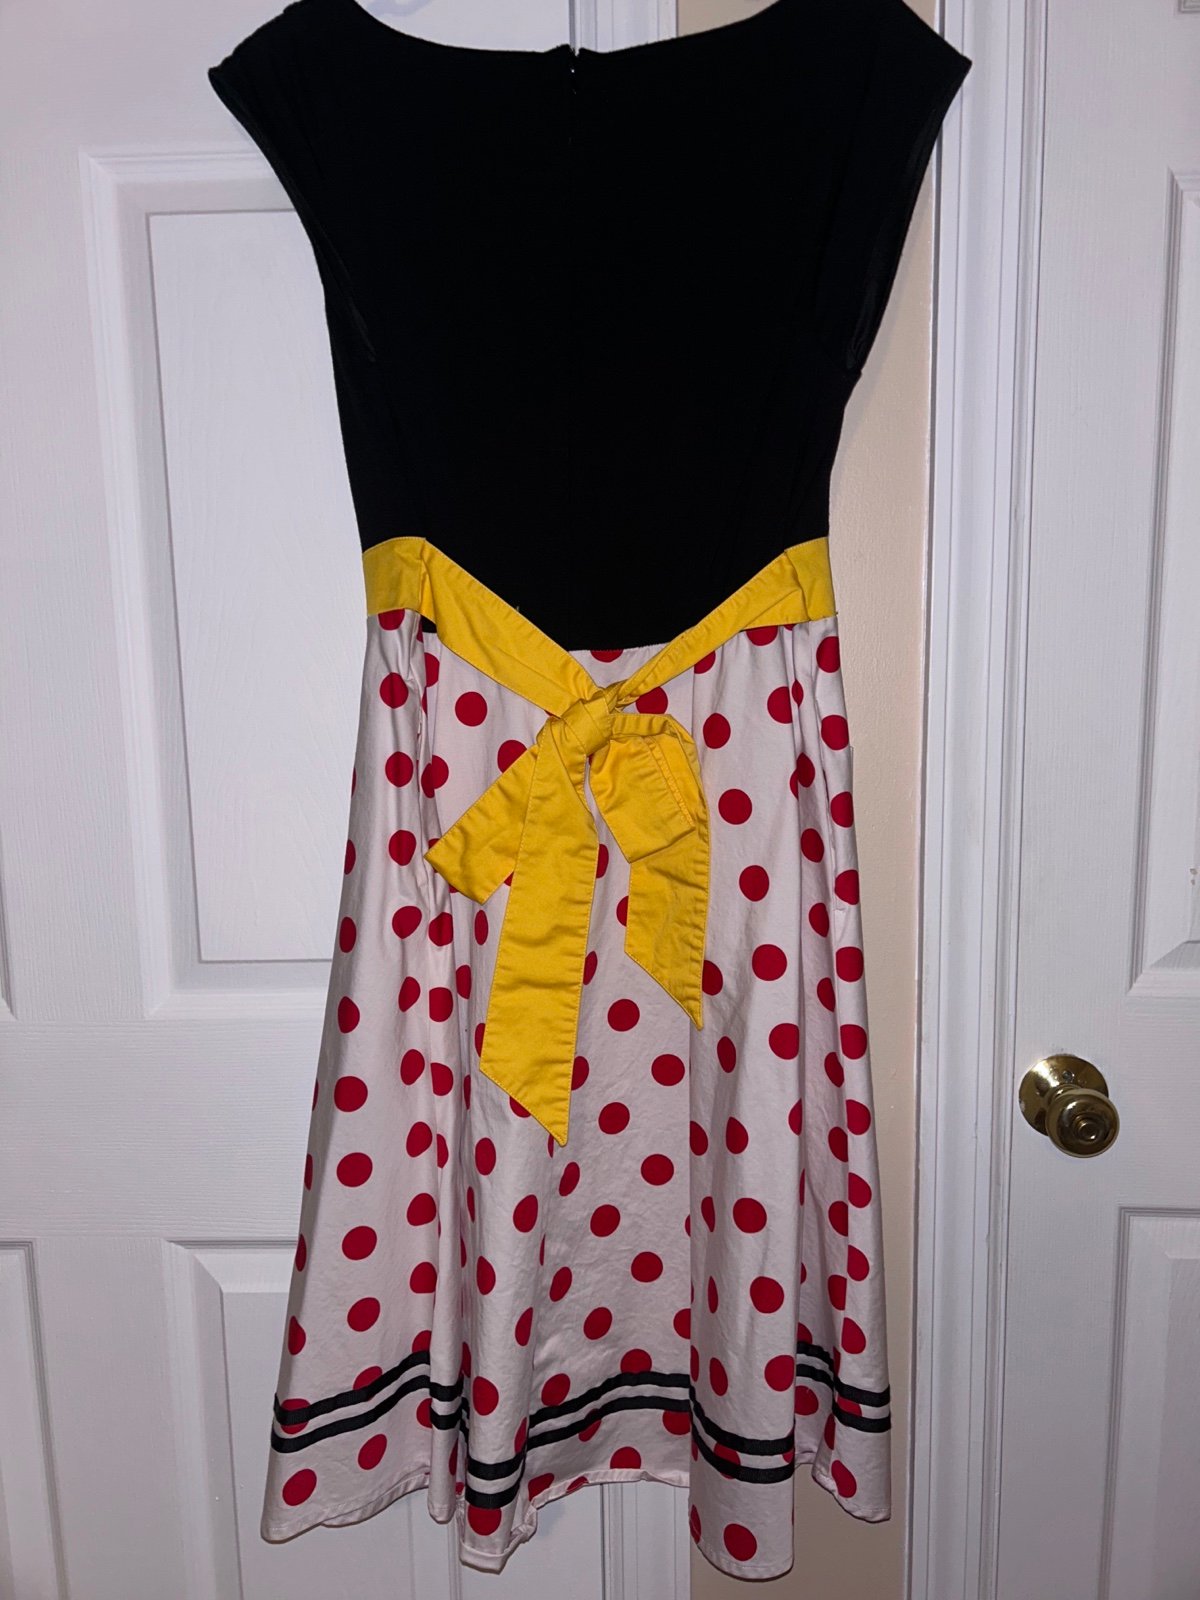 Authentic Disney Dress Shop Minnie Mouse Polkadot Vintage Dress (Large) lJu1NQZ0Z High Quaity